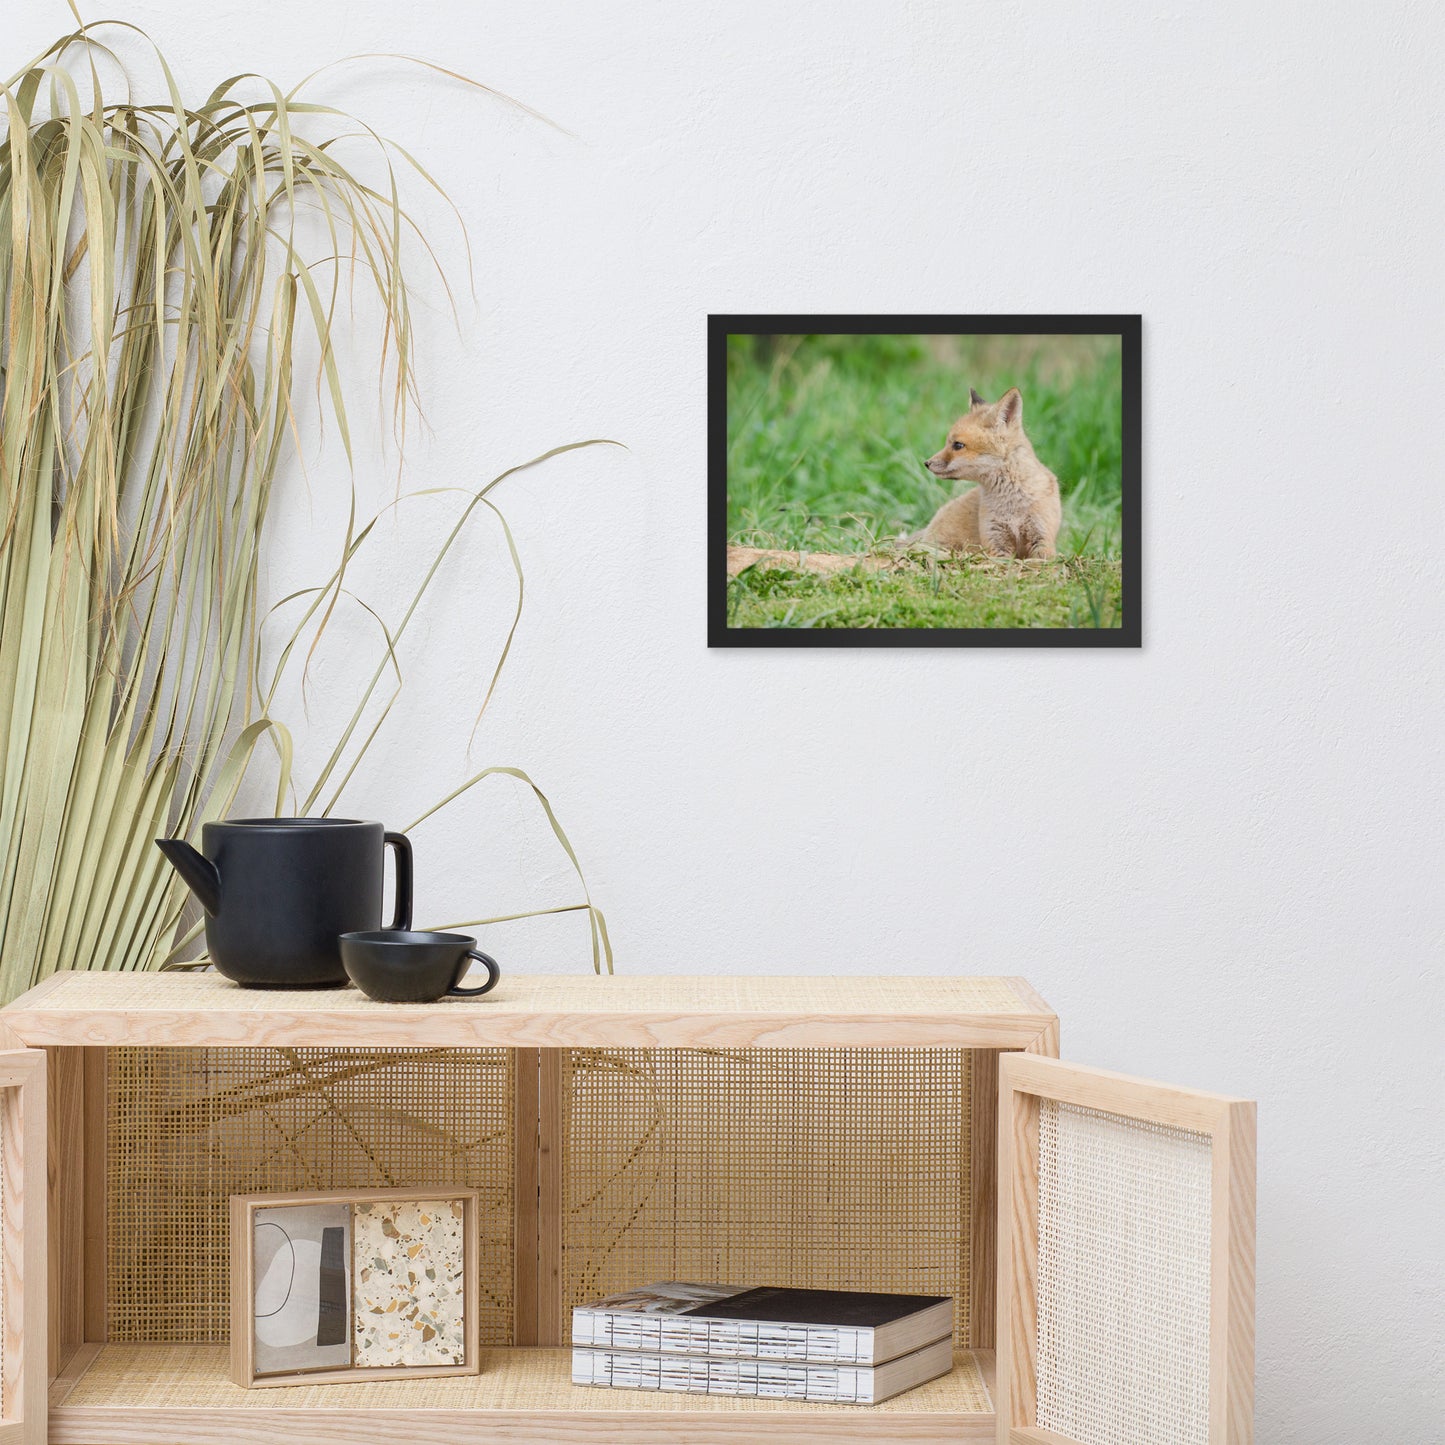 Framed Fox Art: Red Fox Pups - Chilling/ Animal / Wildlife / Nature Photographic Artwork - Framed Artwork - Wall Decor